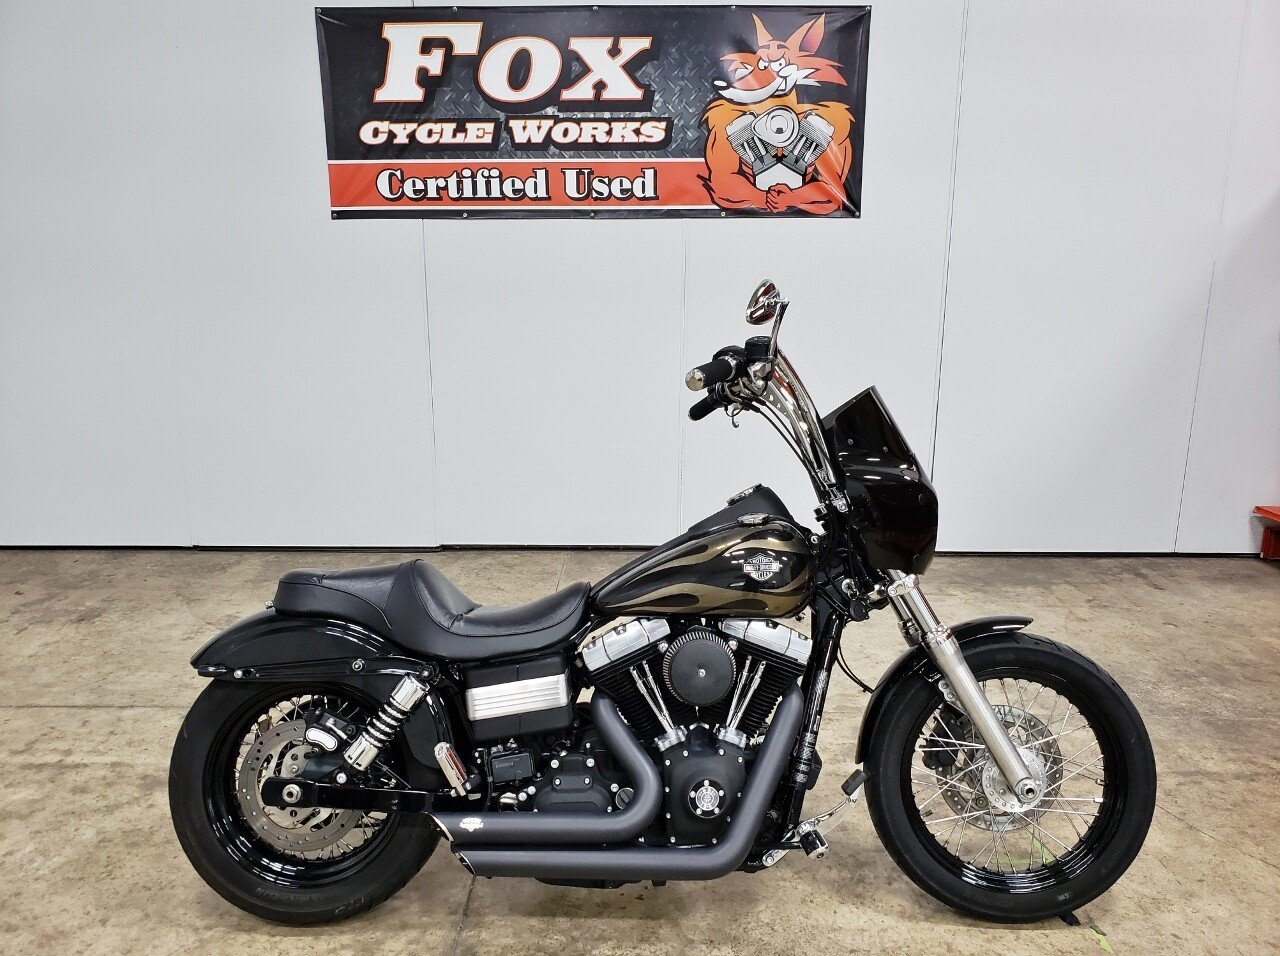 2012 Harley Davidson Dyna Street Bob For Sale Near Sandusky Ohio 44870 Motorcycles On Autotrader